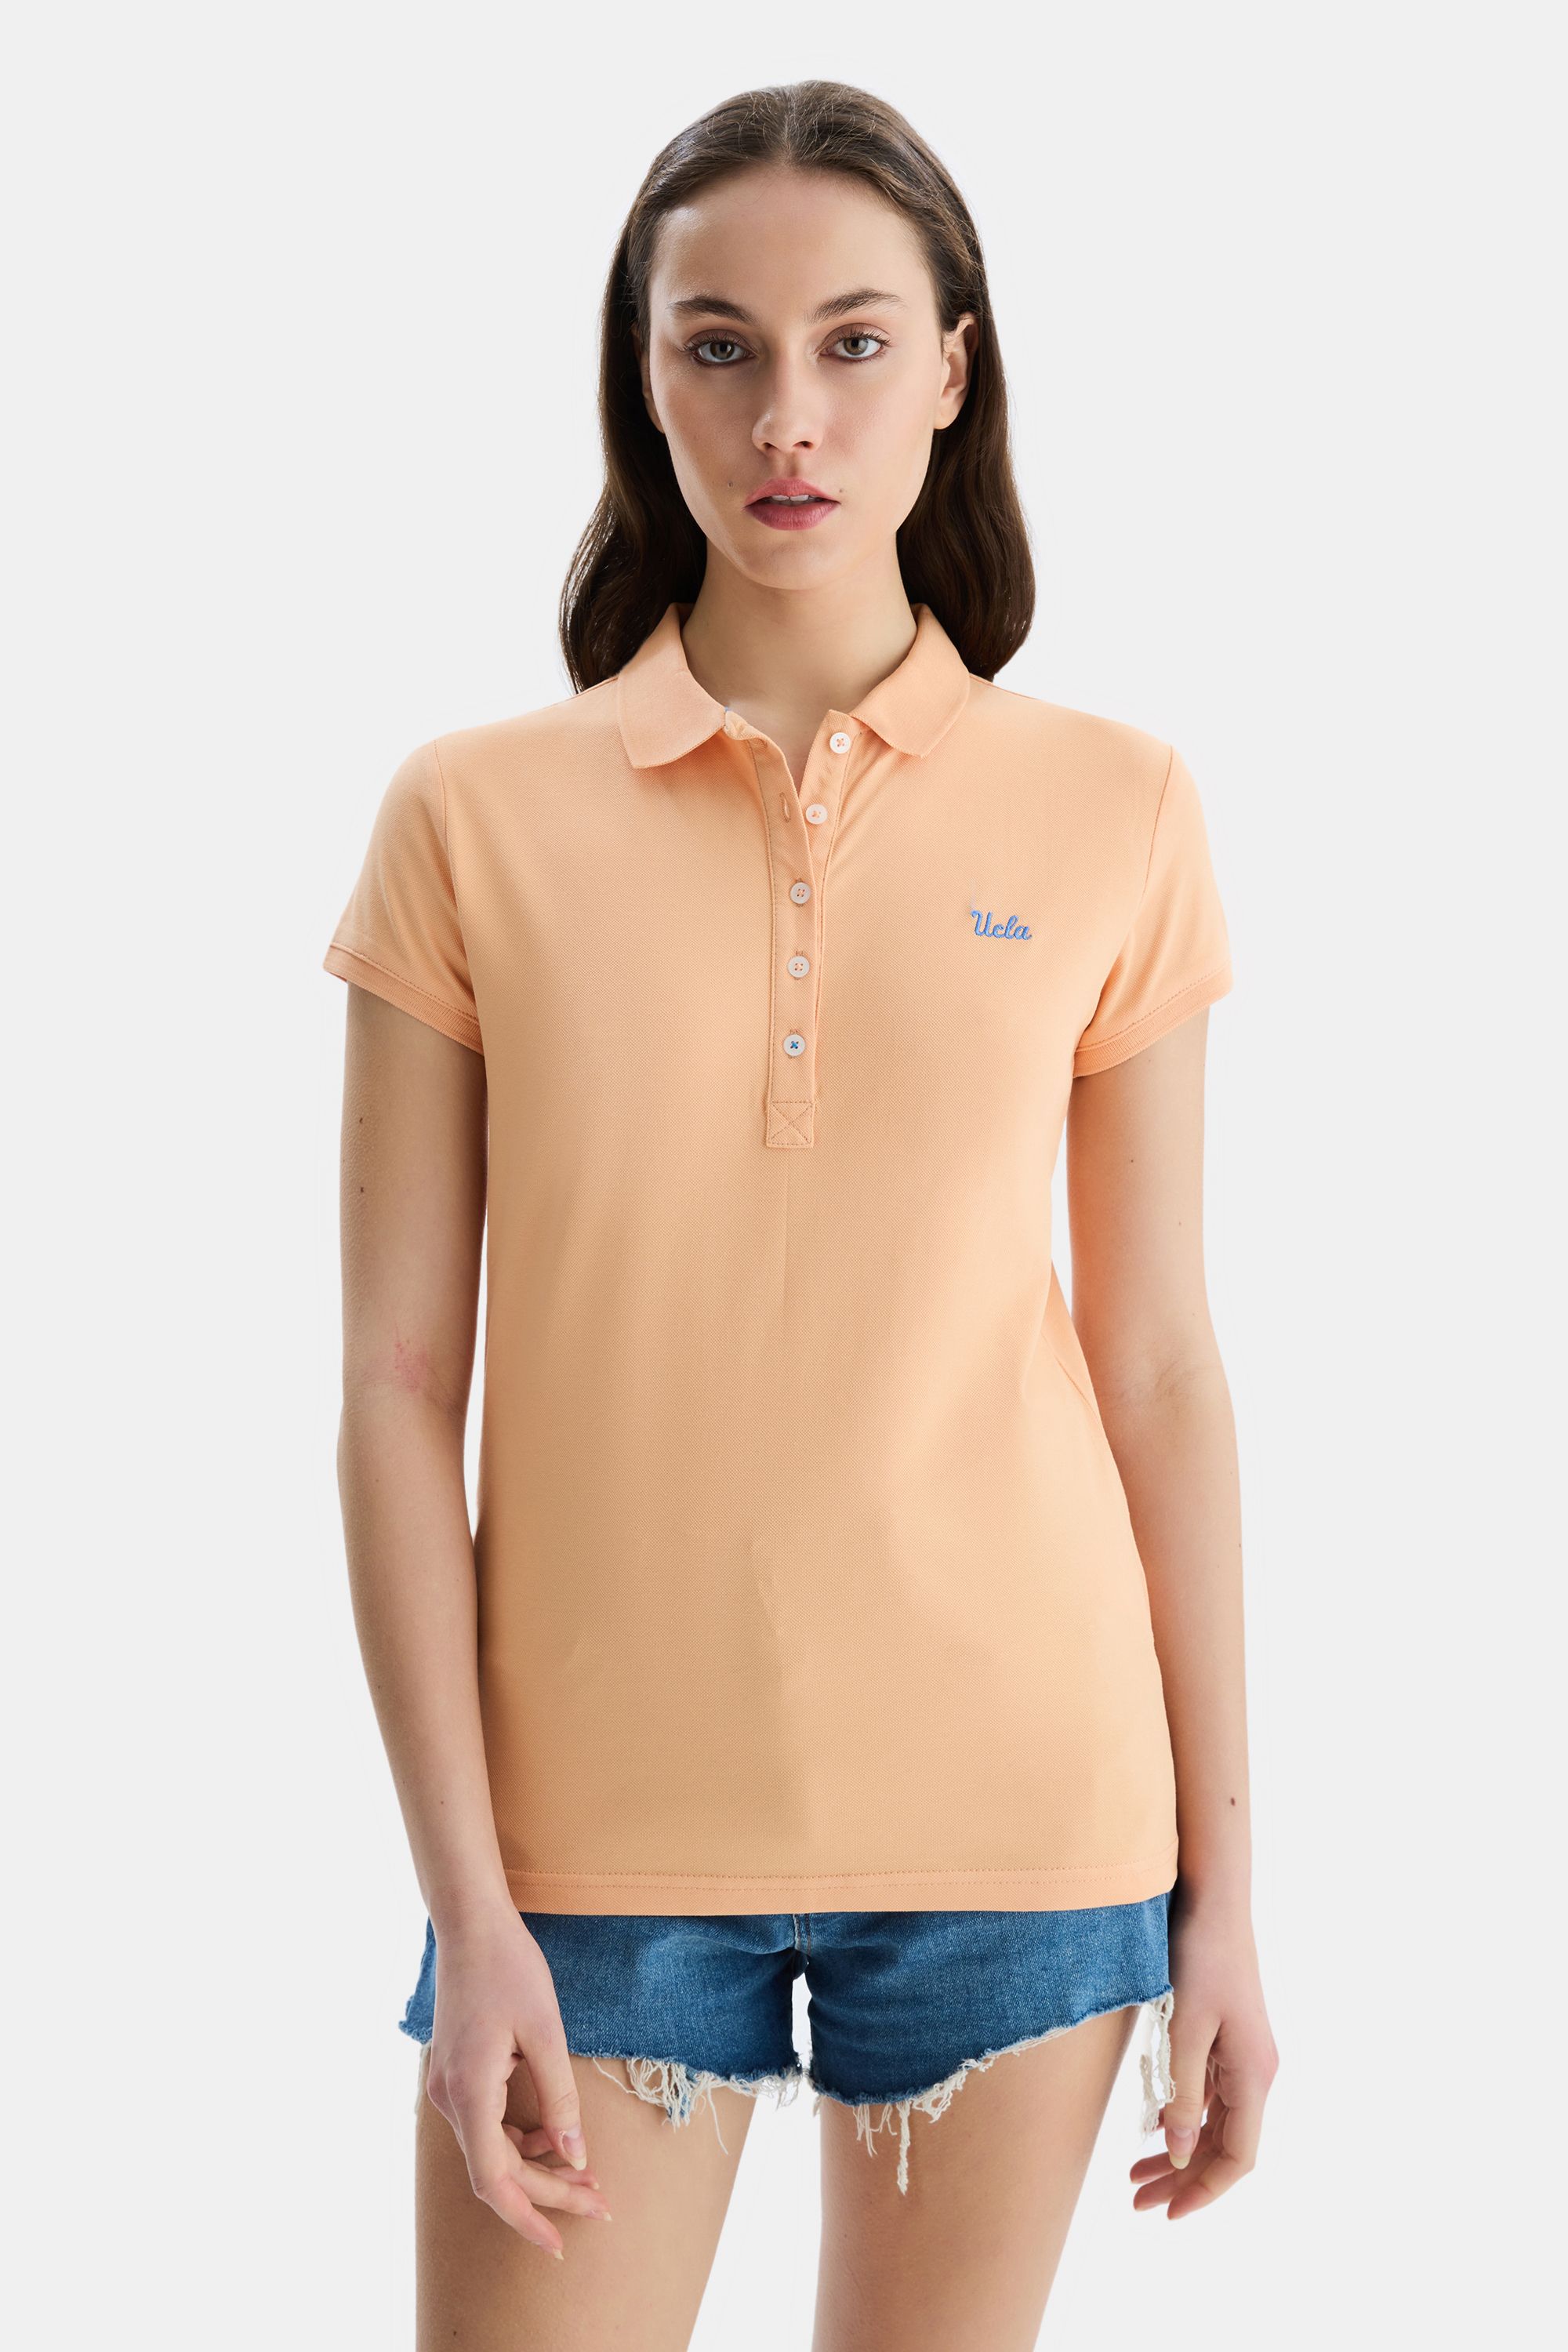 SHAVER Turuncu Polo Yaka Nakışlı Standard Fit Kadın Tshirt